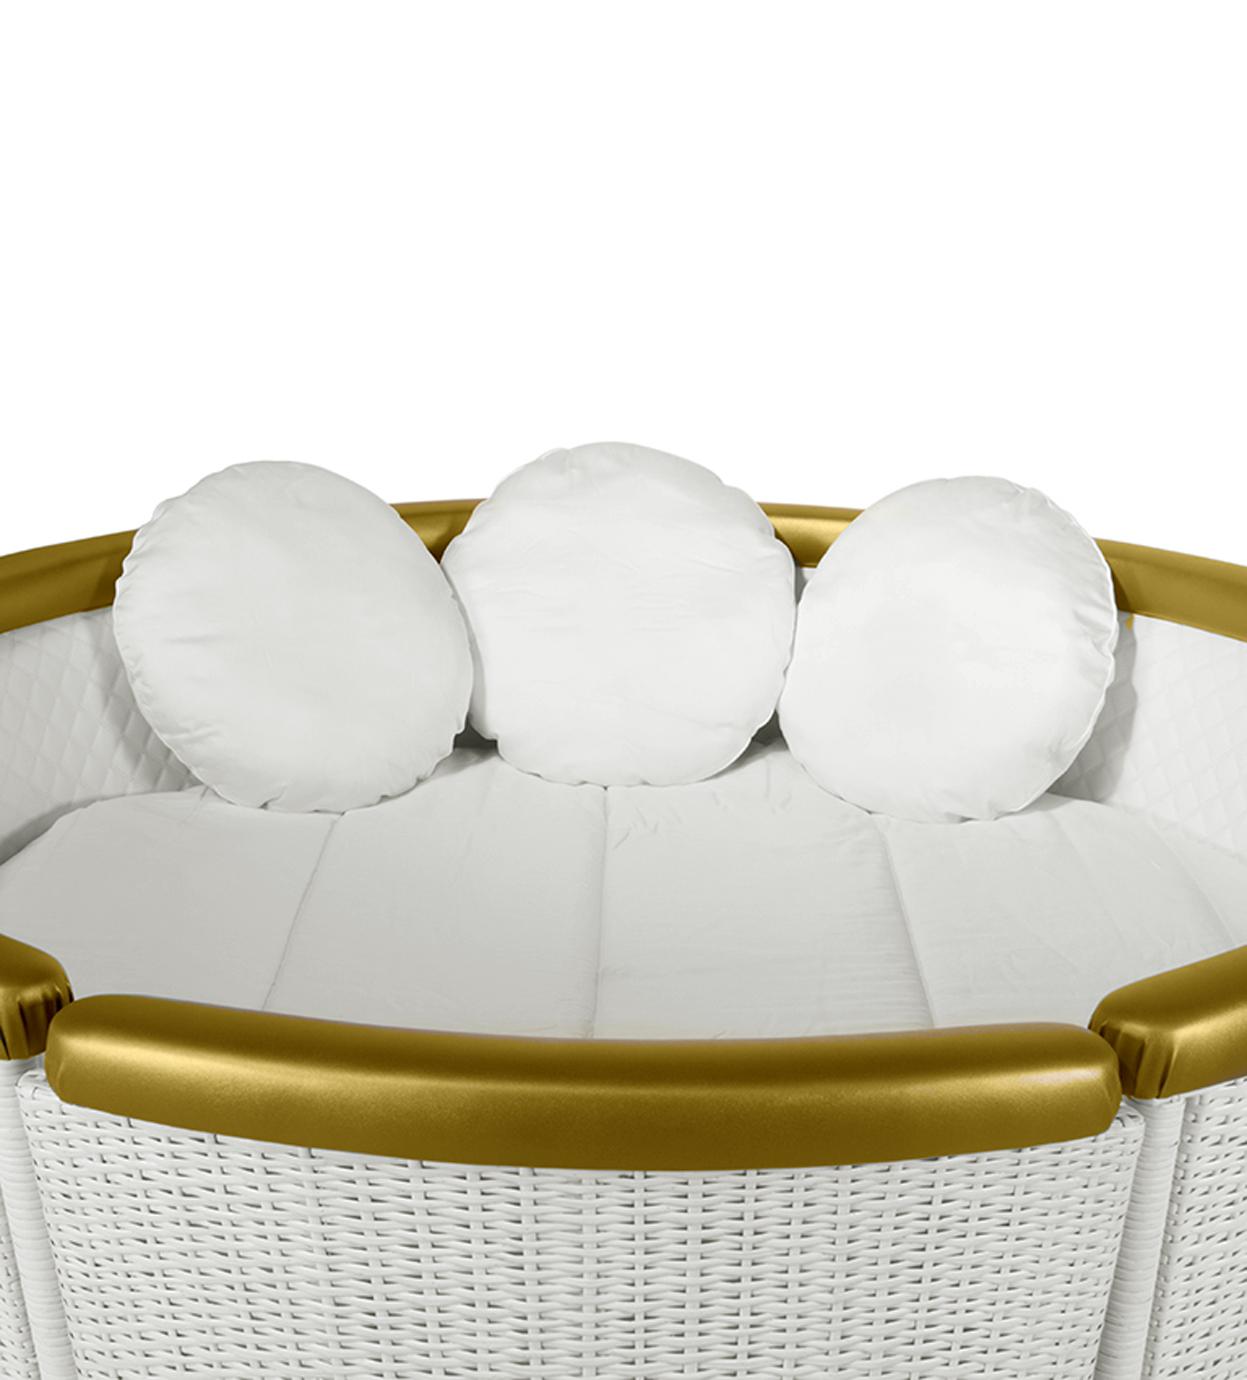 Luxury Ballooning Bed for Children Bedroom Basket Crib Bed & Sofa for Kids Room 8